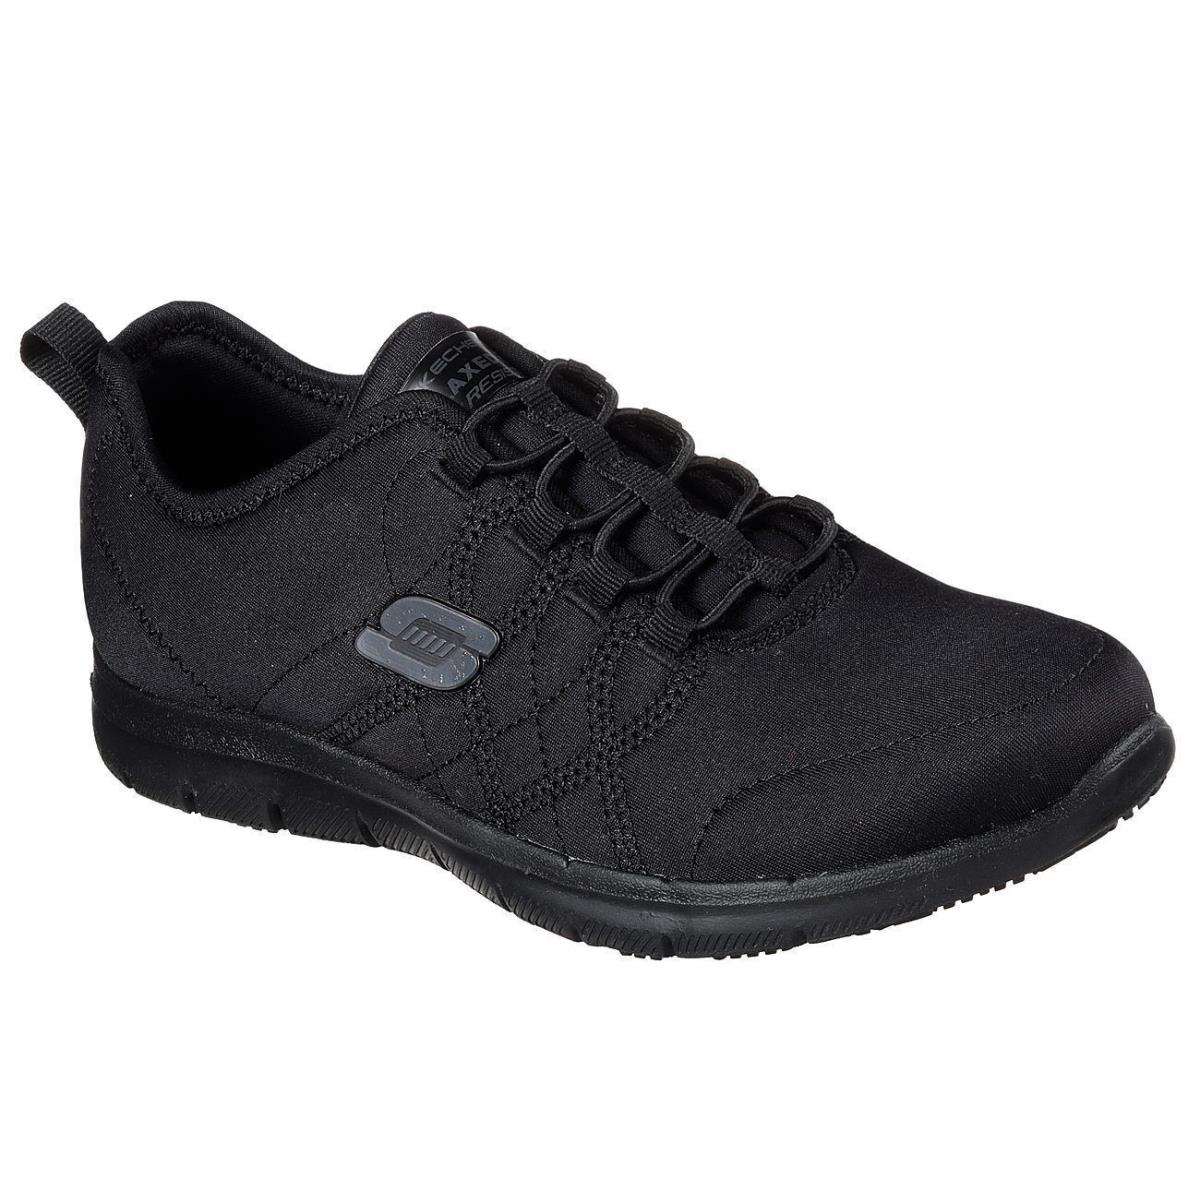 77211 Black Skechers Shoes Women Memory Foam Work Slip Resistant Comfort Sporty